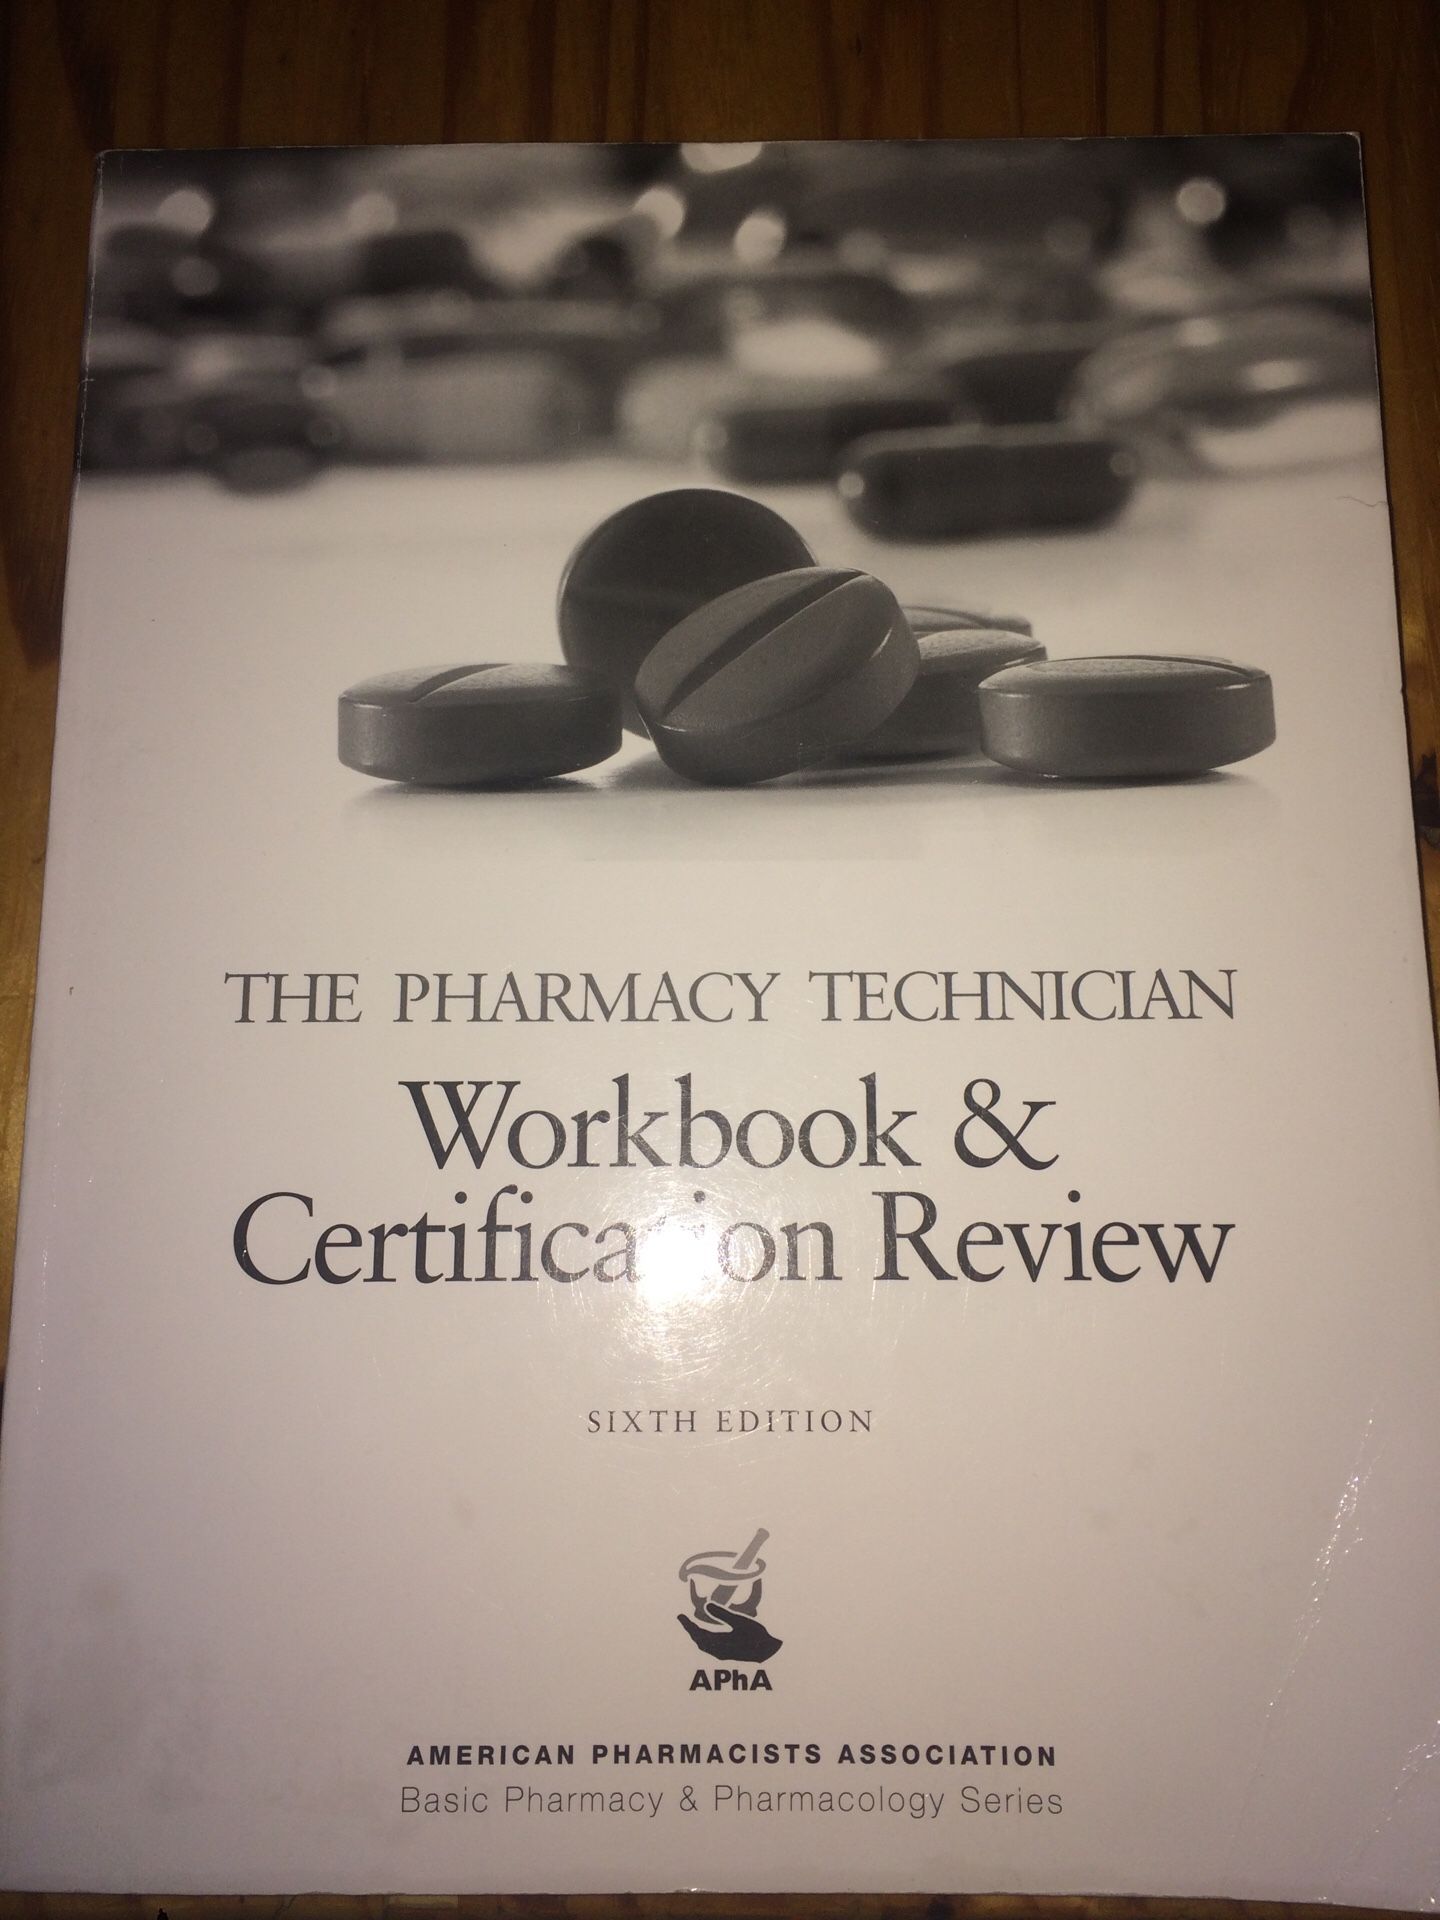 The pharmacy technician work book